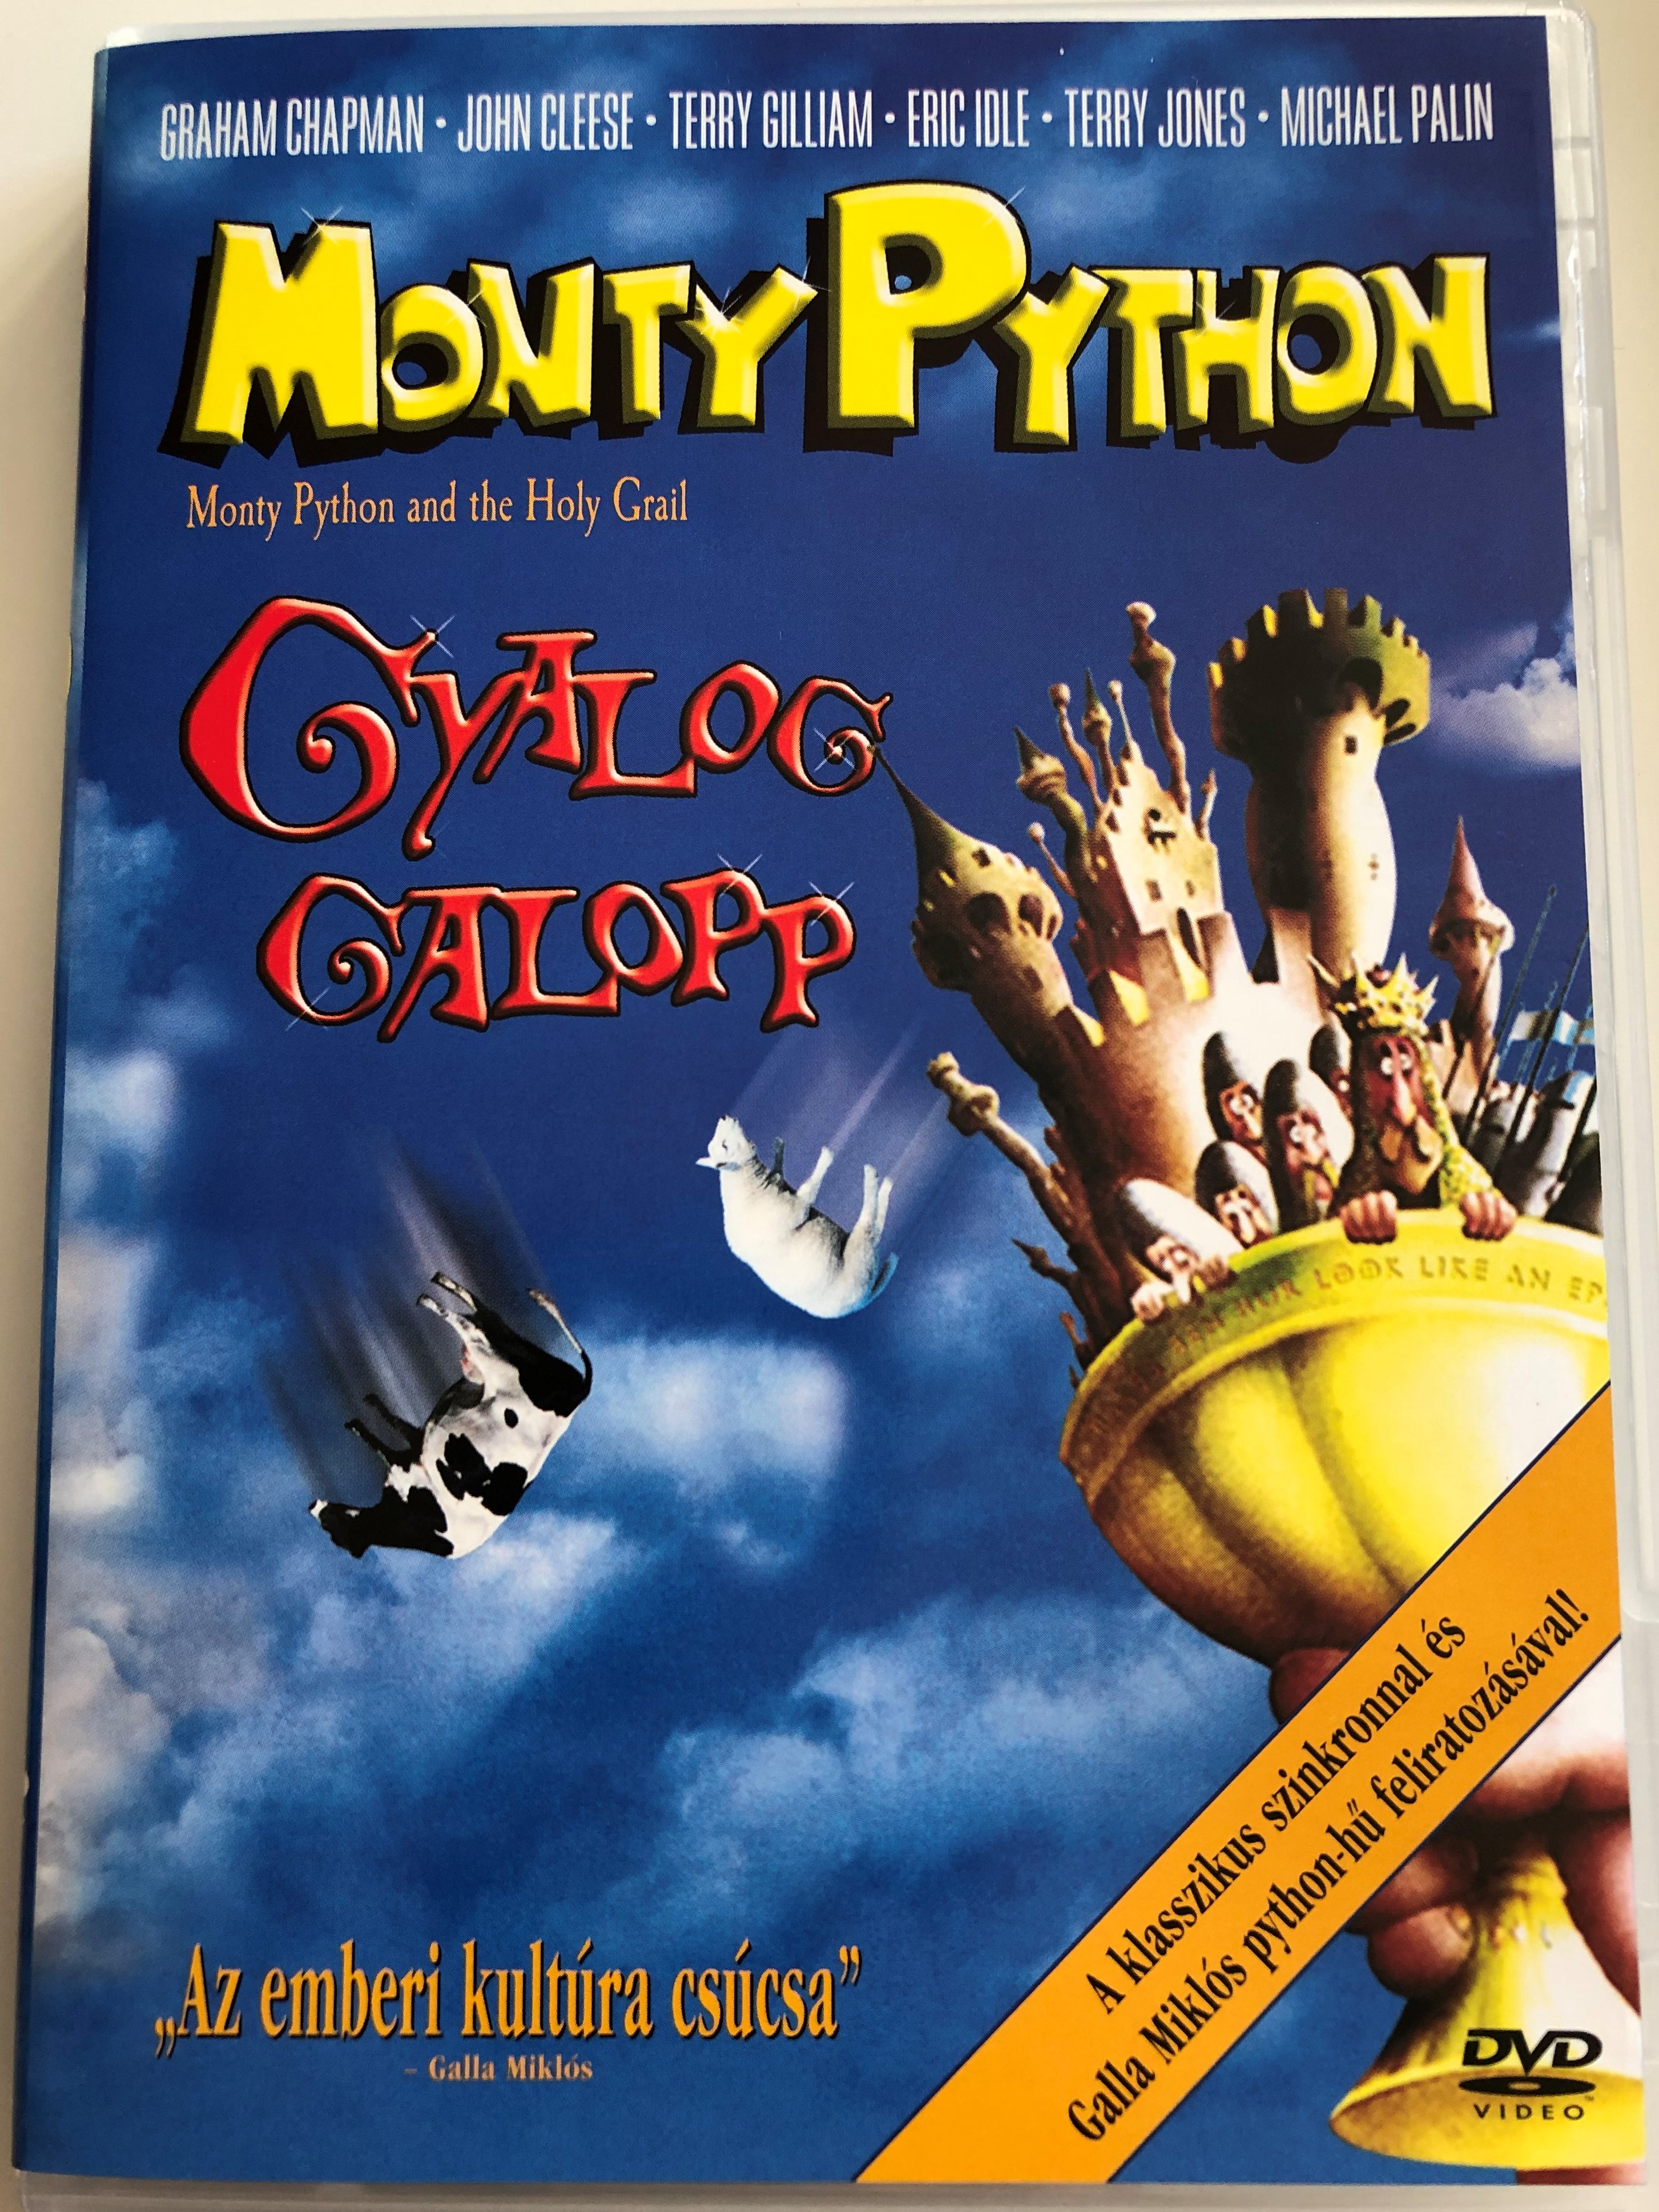 Monty Python and the Holy Grail DVD Monty Python Gyalog Galopp / Directed  by Terry Gilliam, Terry Jones / Starring: Graham Chapman, John Cleese,  Terry Gilliam, Eric Idle, Terry Jones, Michael Palin - bibleinmylanguage